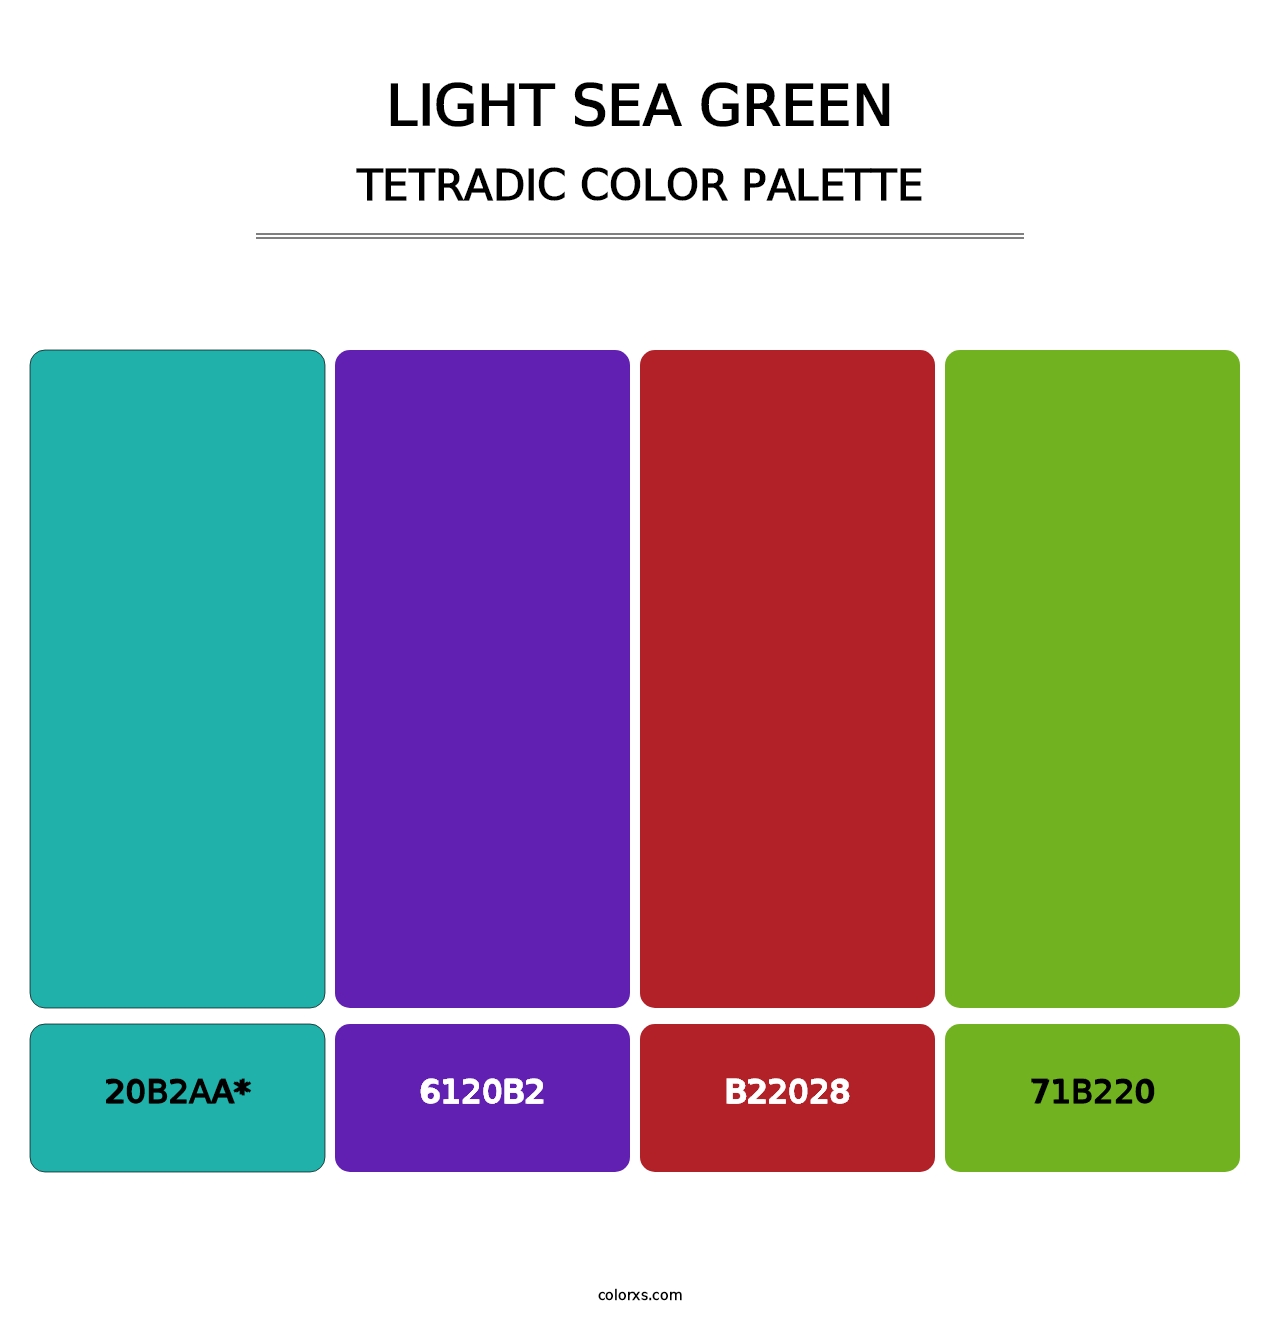 Light Sea Green - Tetradic Color Palette